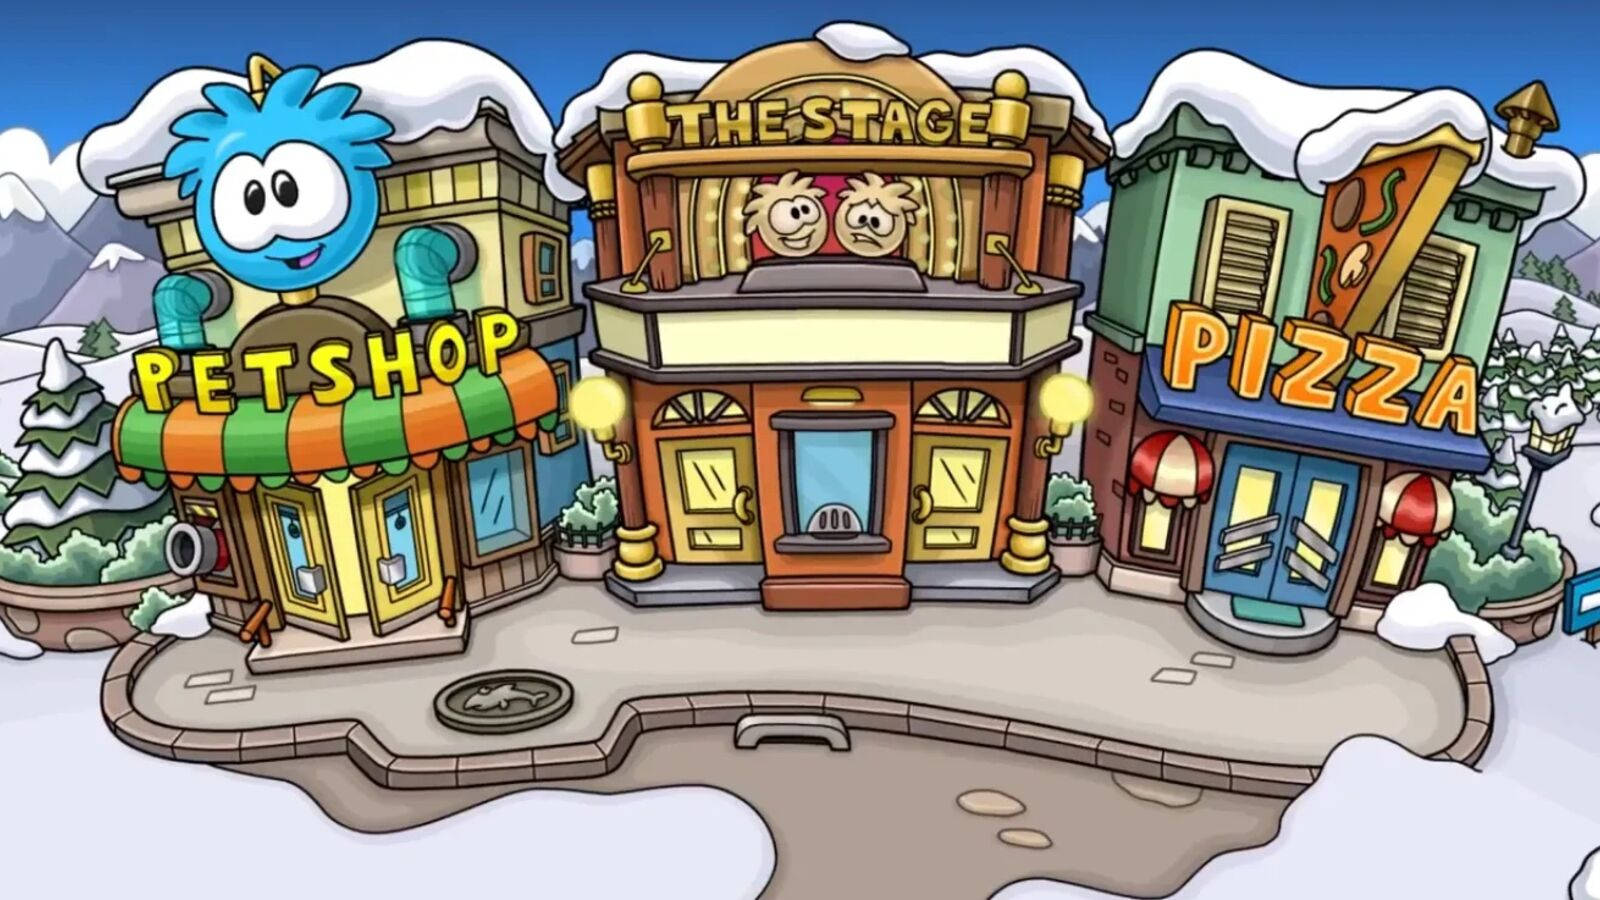 Adorable Club Penguin Village Background